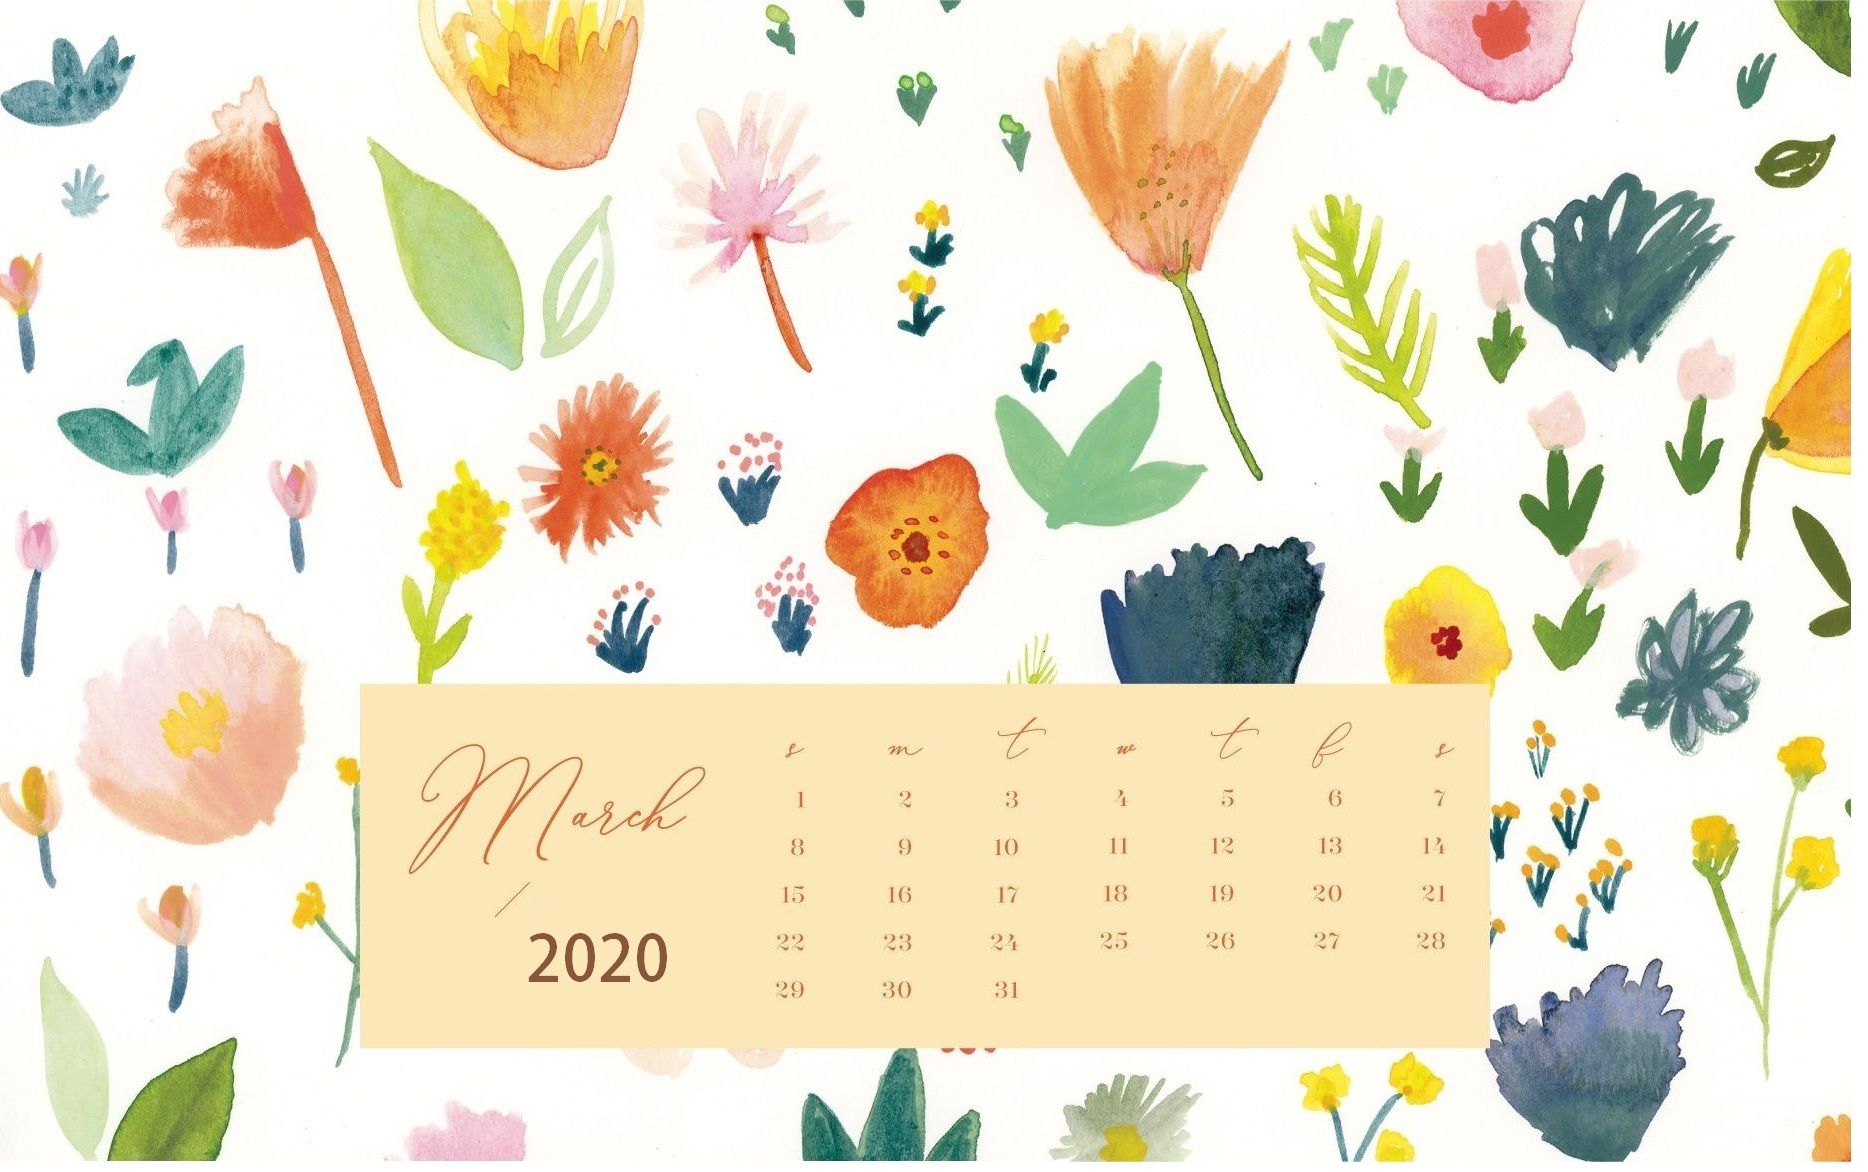 Floral March Calendar 2020 Cute Wallpaper for Desktop, Laptop, iPhone